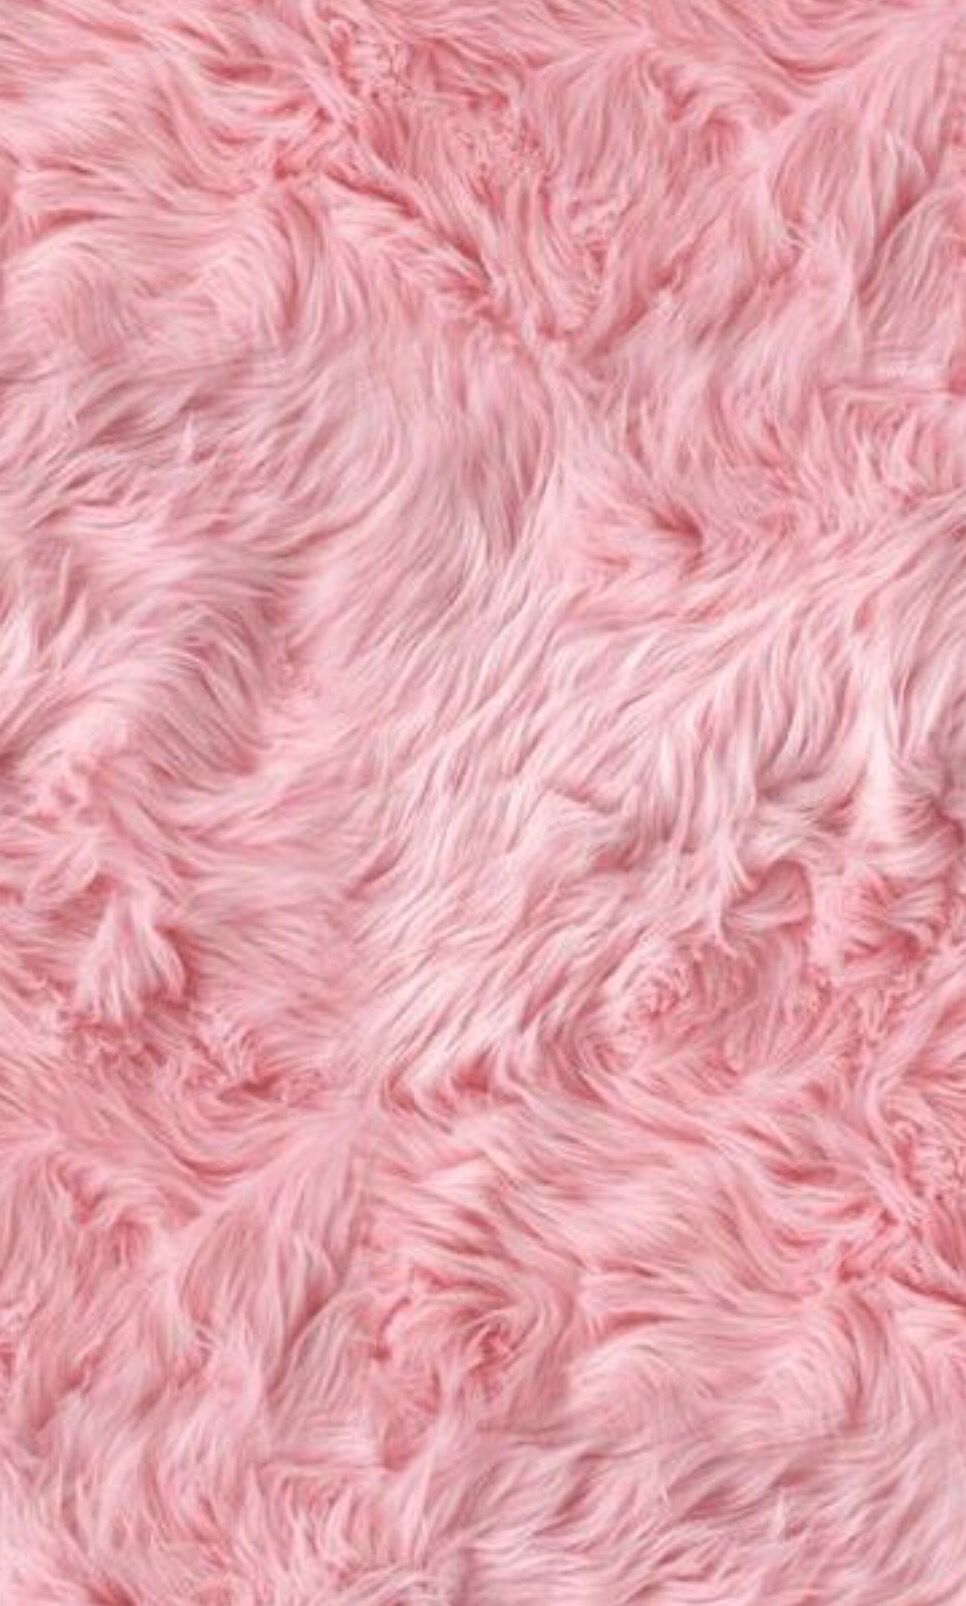 Pink Fluffy Wallpaper iPhone